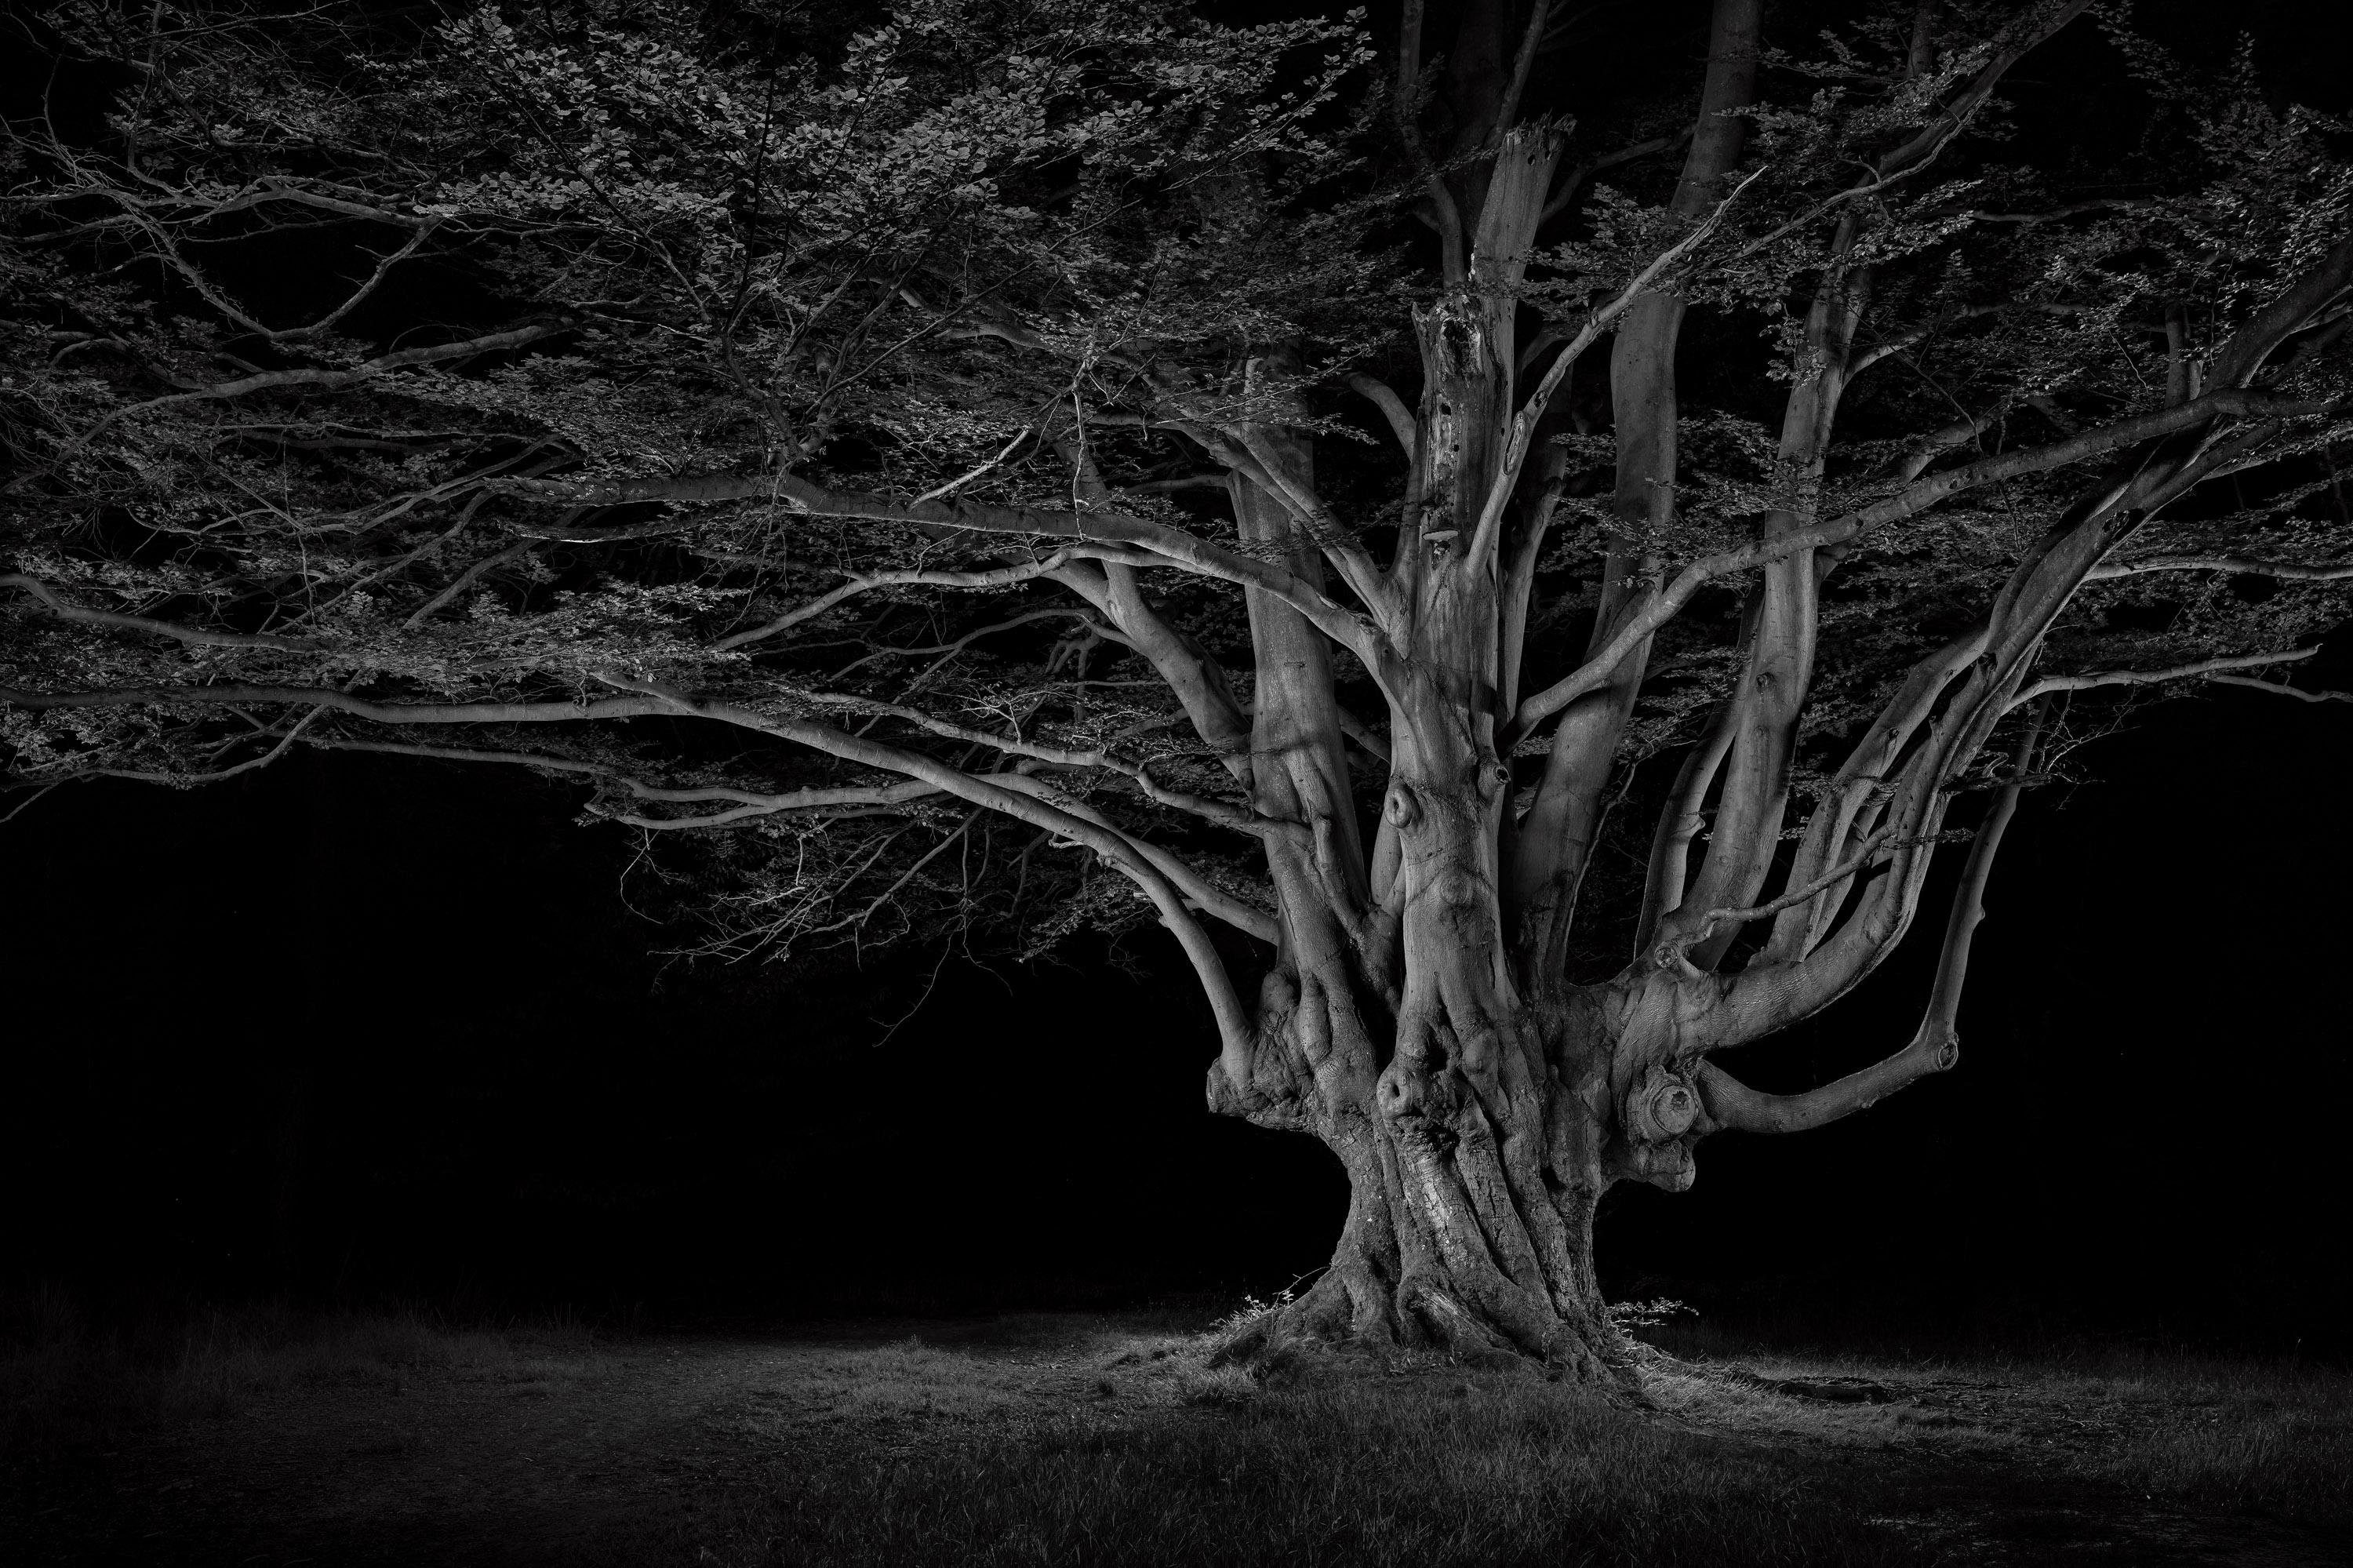 Black and White Photograph Jasper Goodall - Ancient #02, Beeche Pollard ; paysage d'arbres en noir et blanc